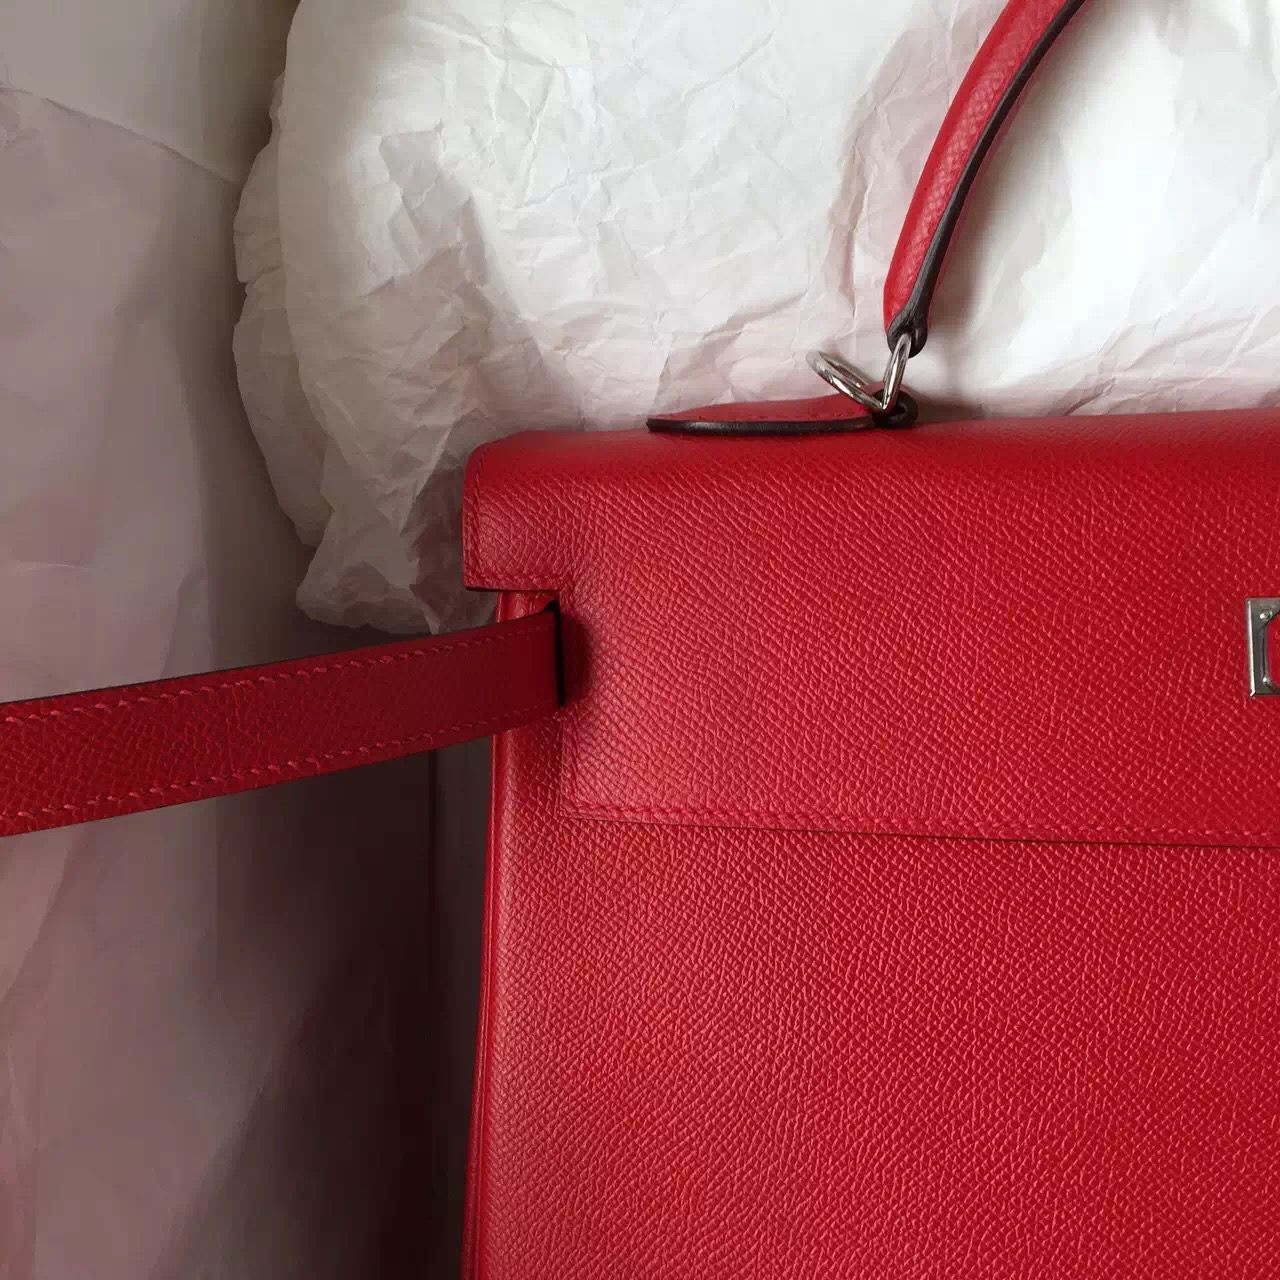 Cheap Hermes Q5 Chinese Red Kelly Bag 35cm Retourne Epsom Leather Tote Bag